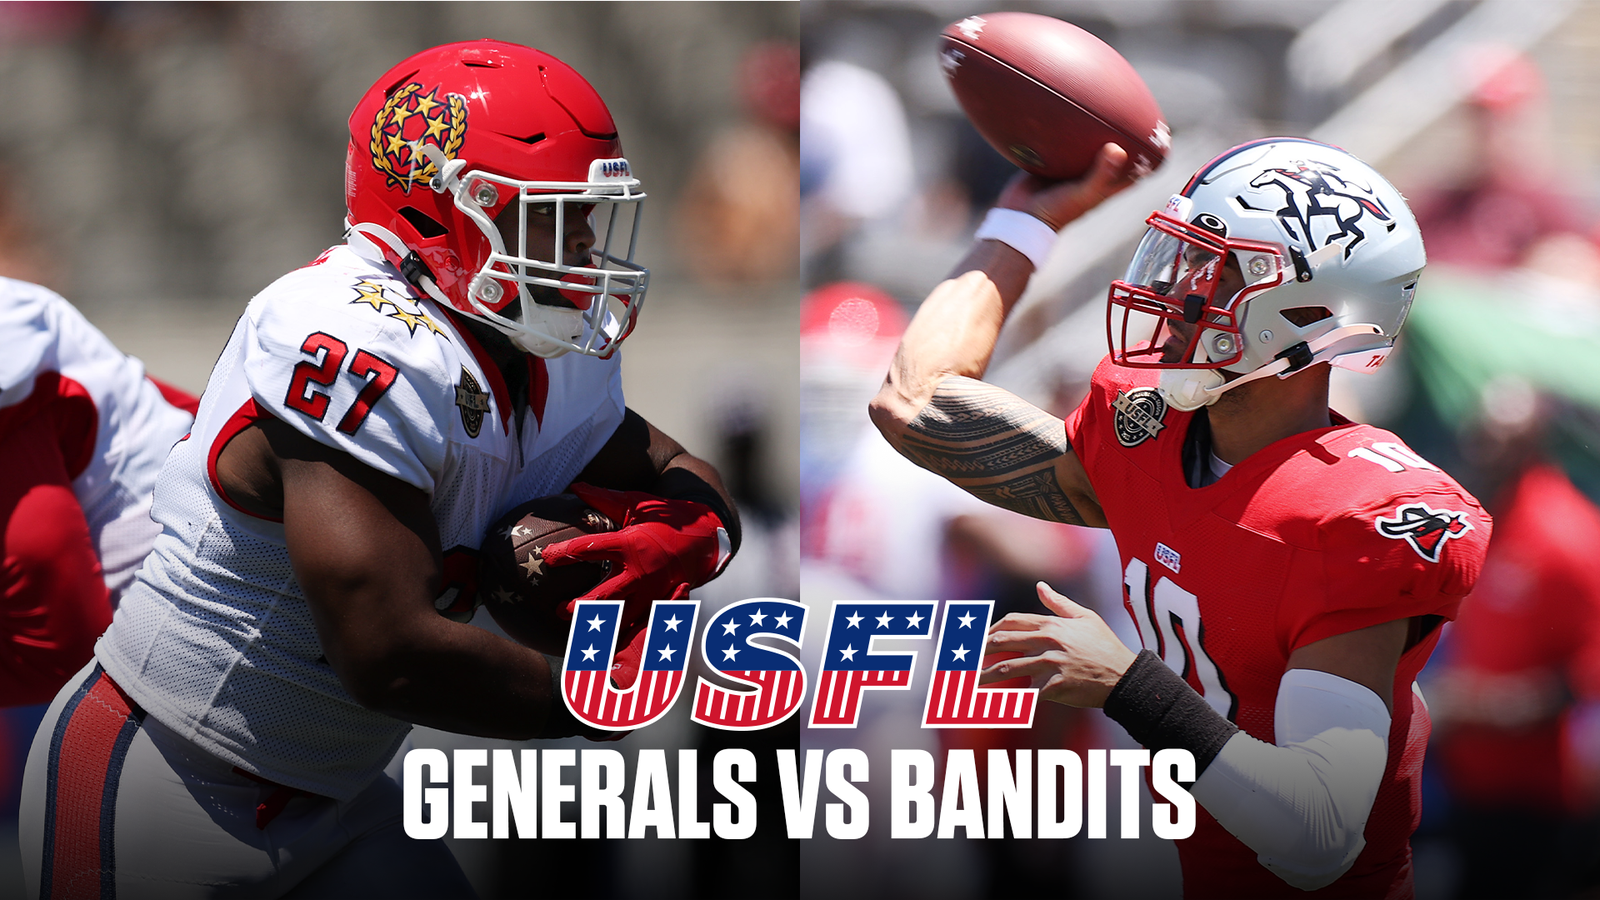 Generals clinch playoff berth, defeat Bandits 20-13 behind stout defense